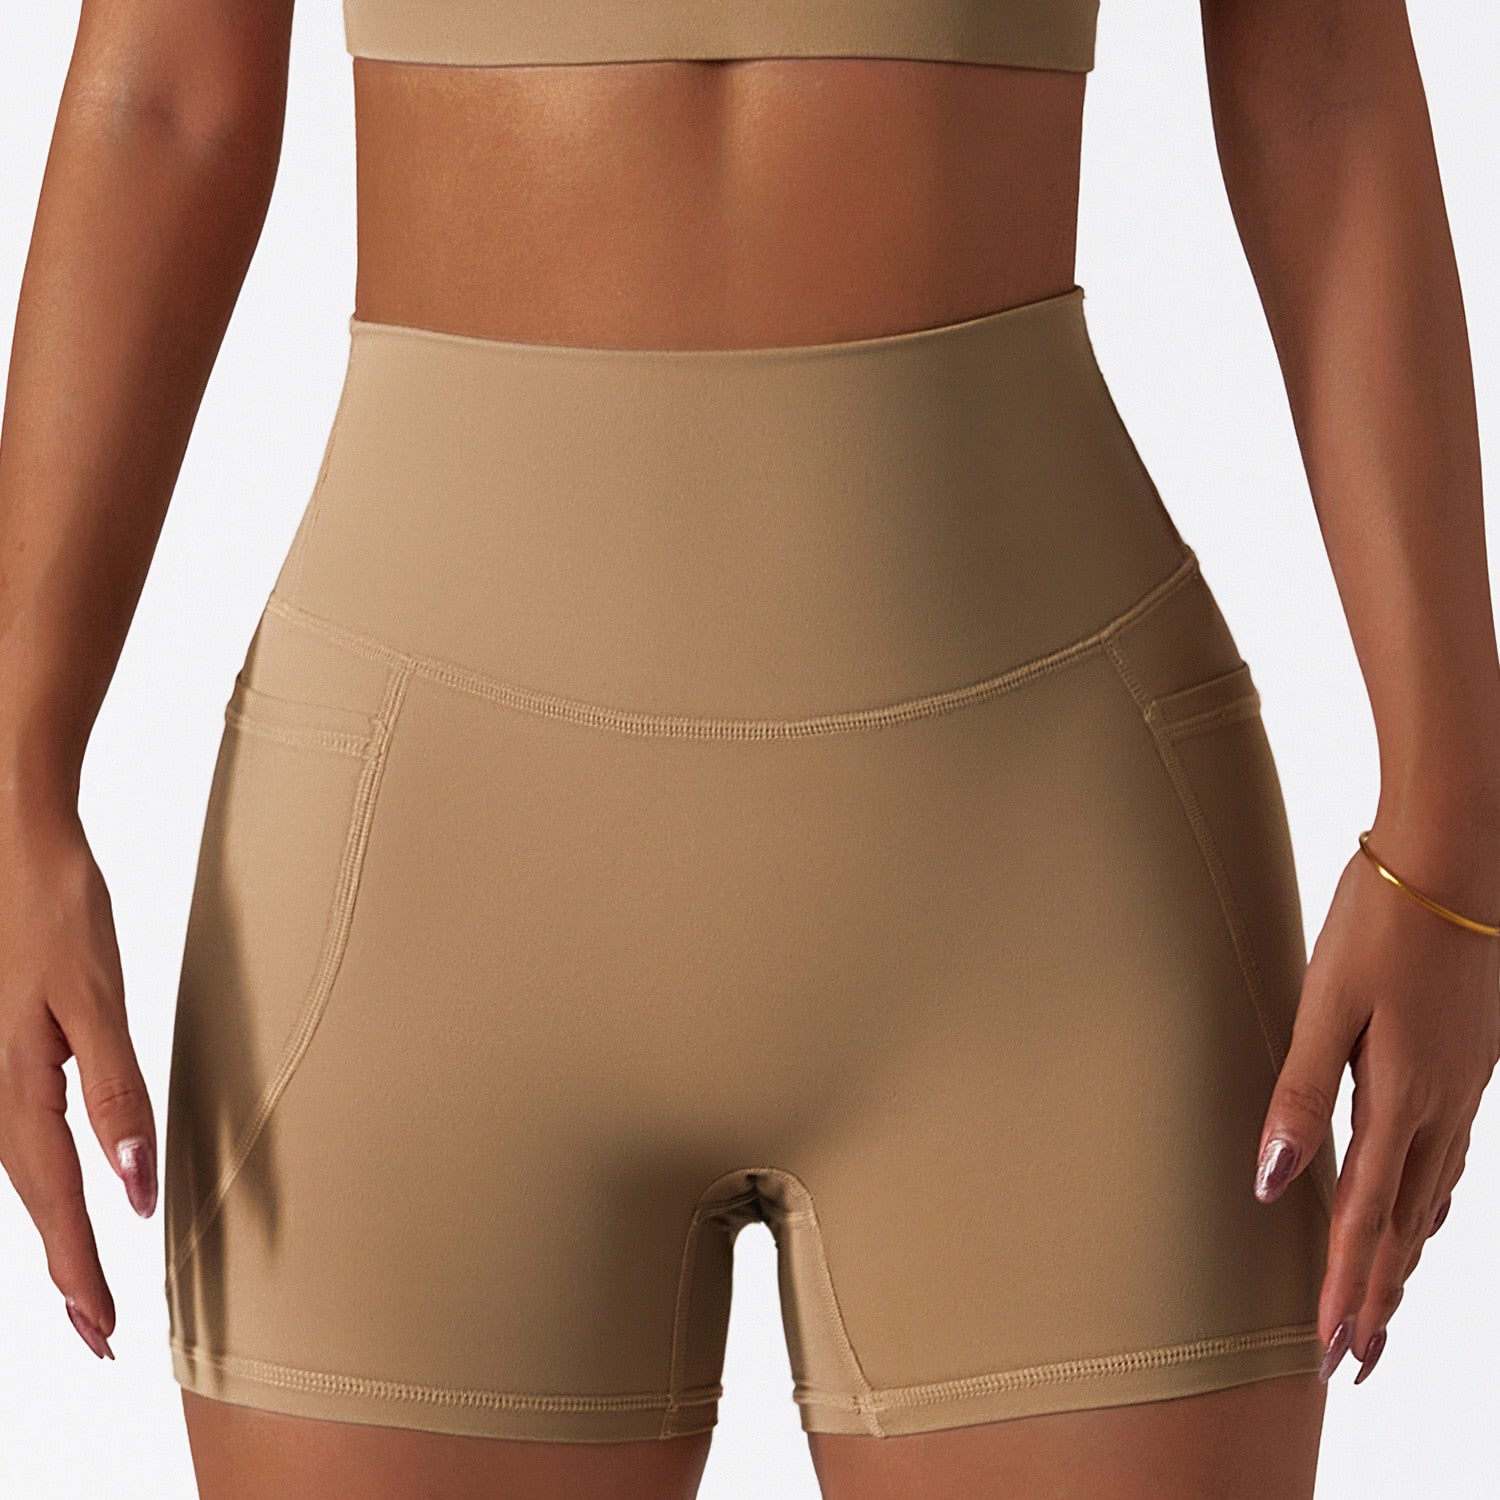 Acheter brown Comfortable Skin Friendly High Waist Yoga Shorts